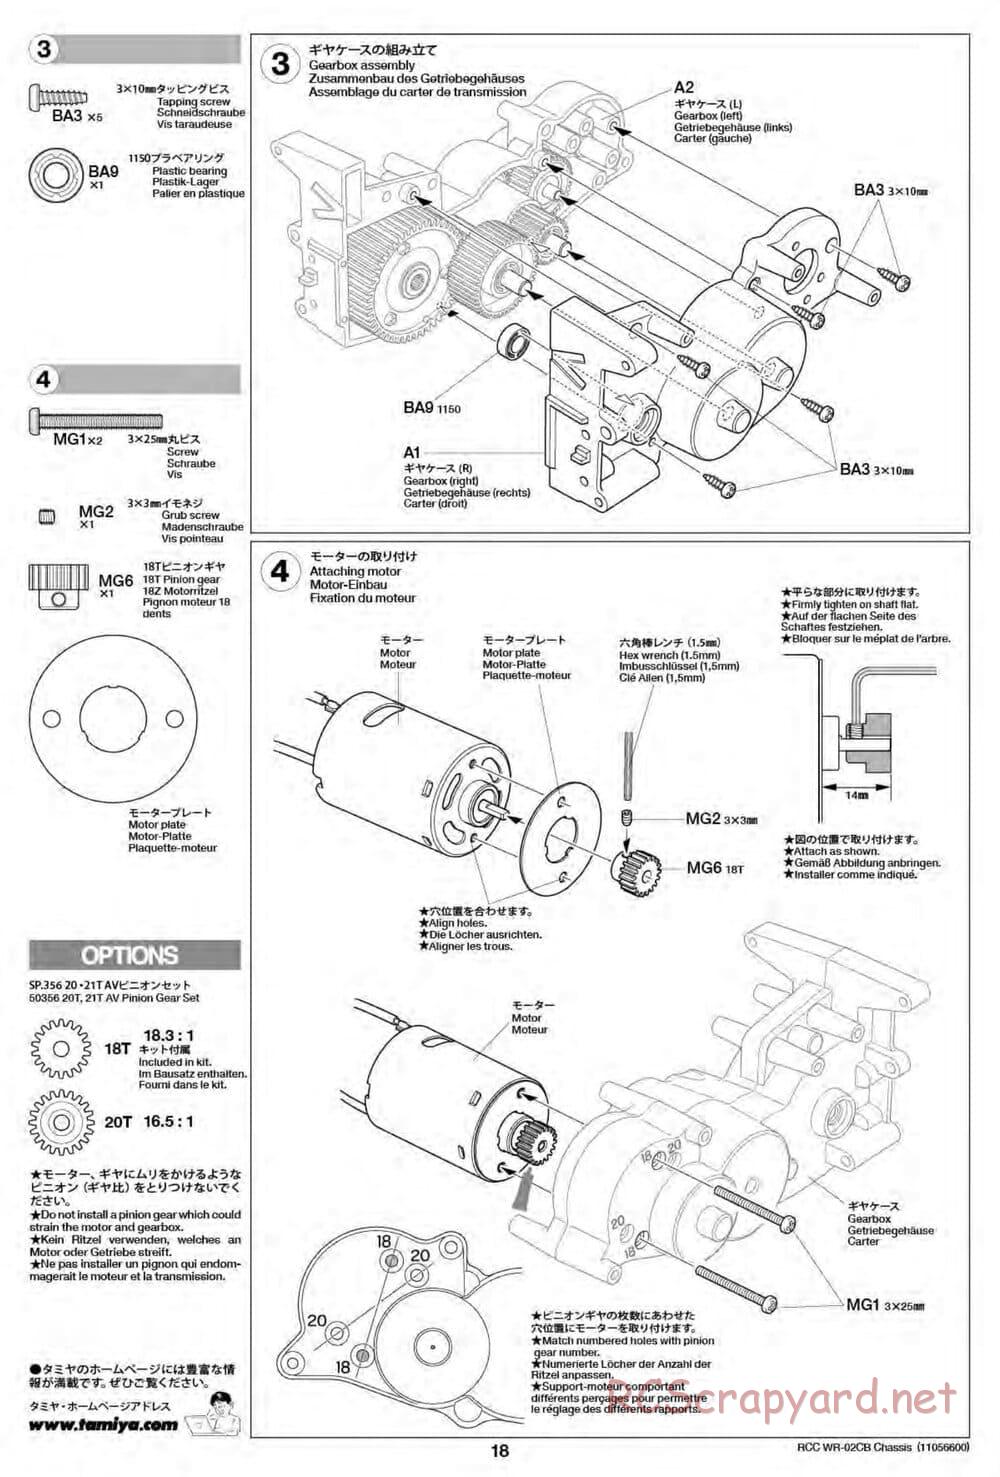 Tamiya - WR-02CB Chassis - Manual - Page 18